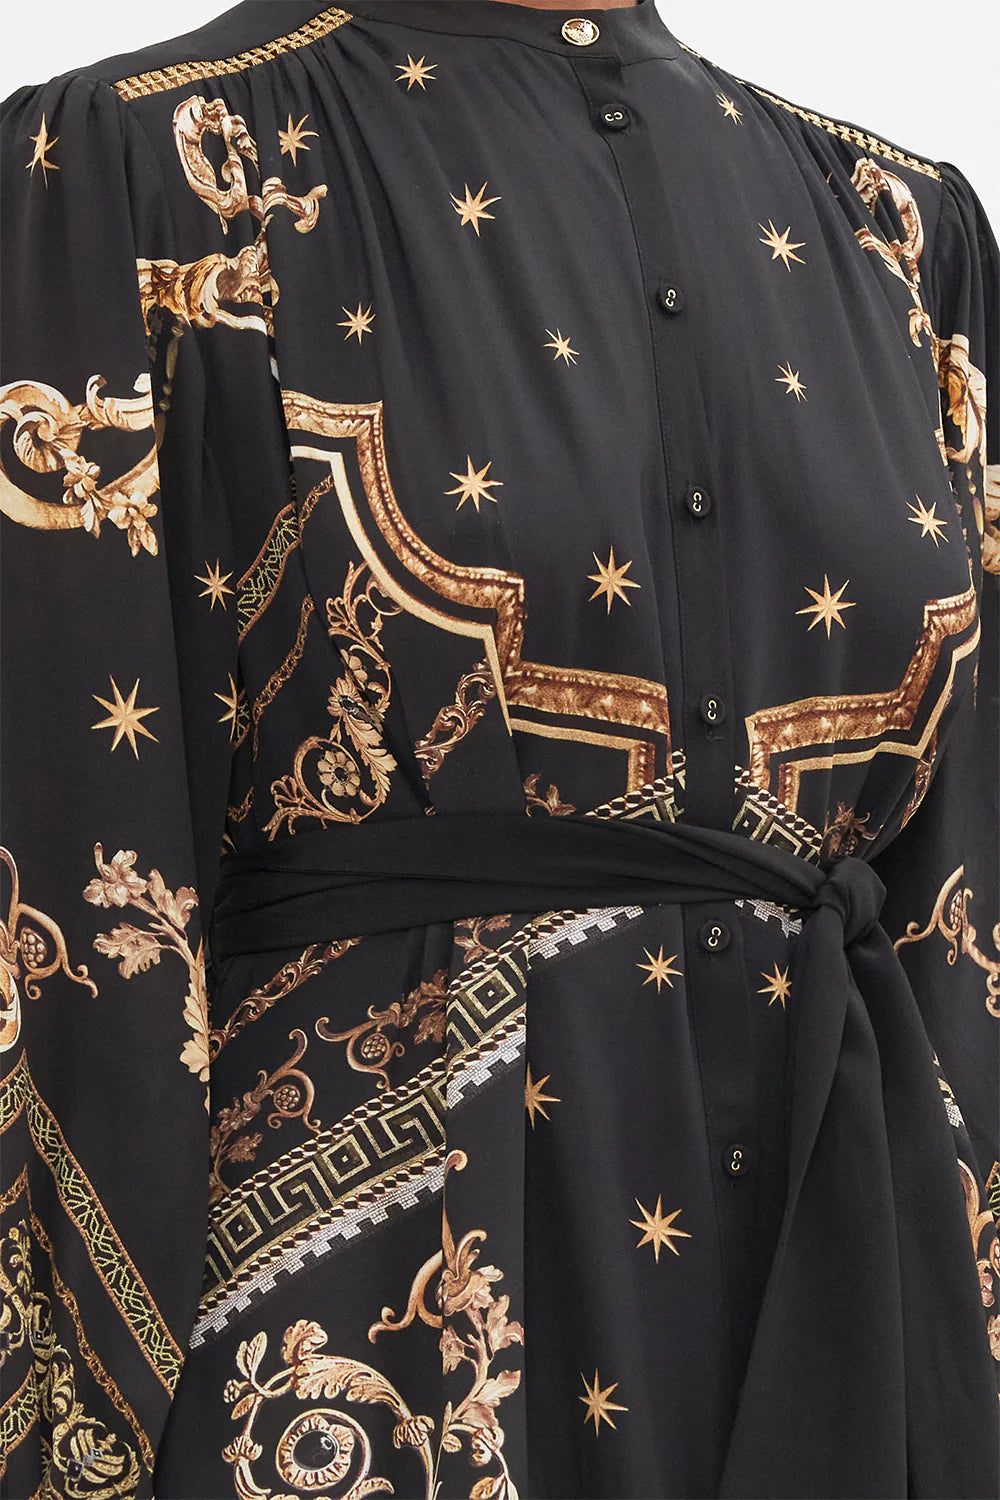 Button Through Dress With Yoke (Duomo Dynasty)